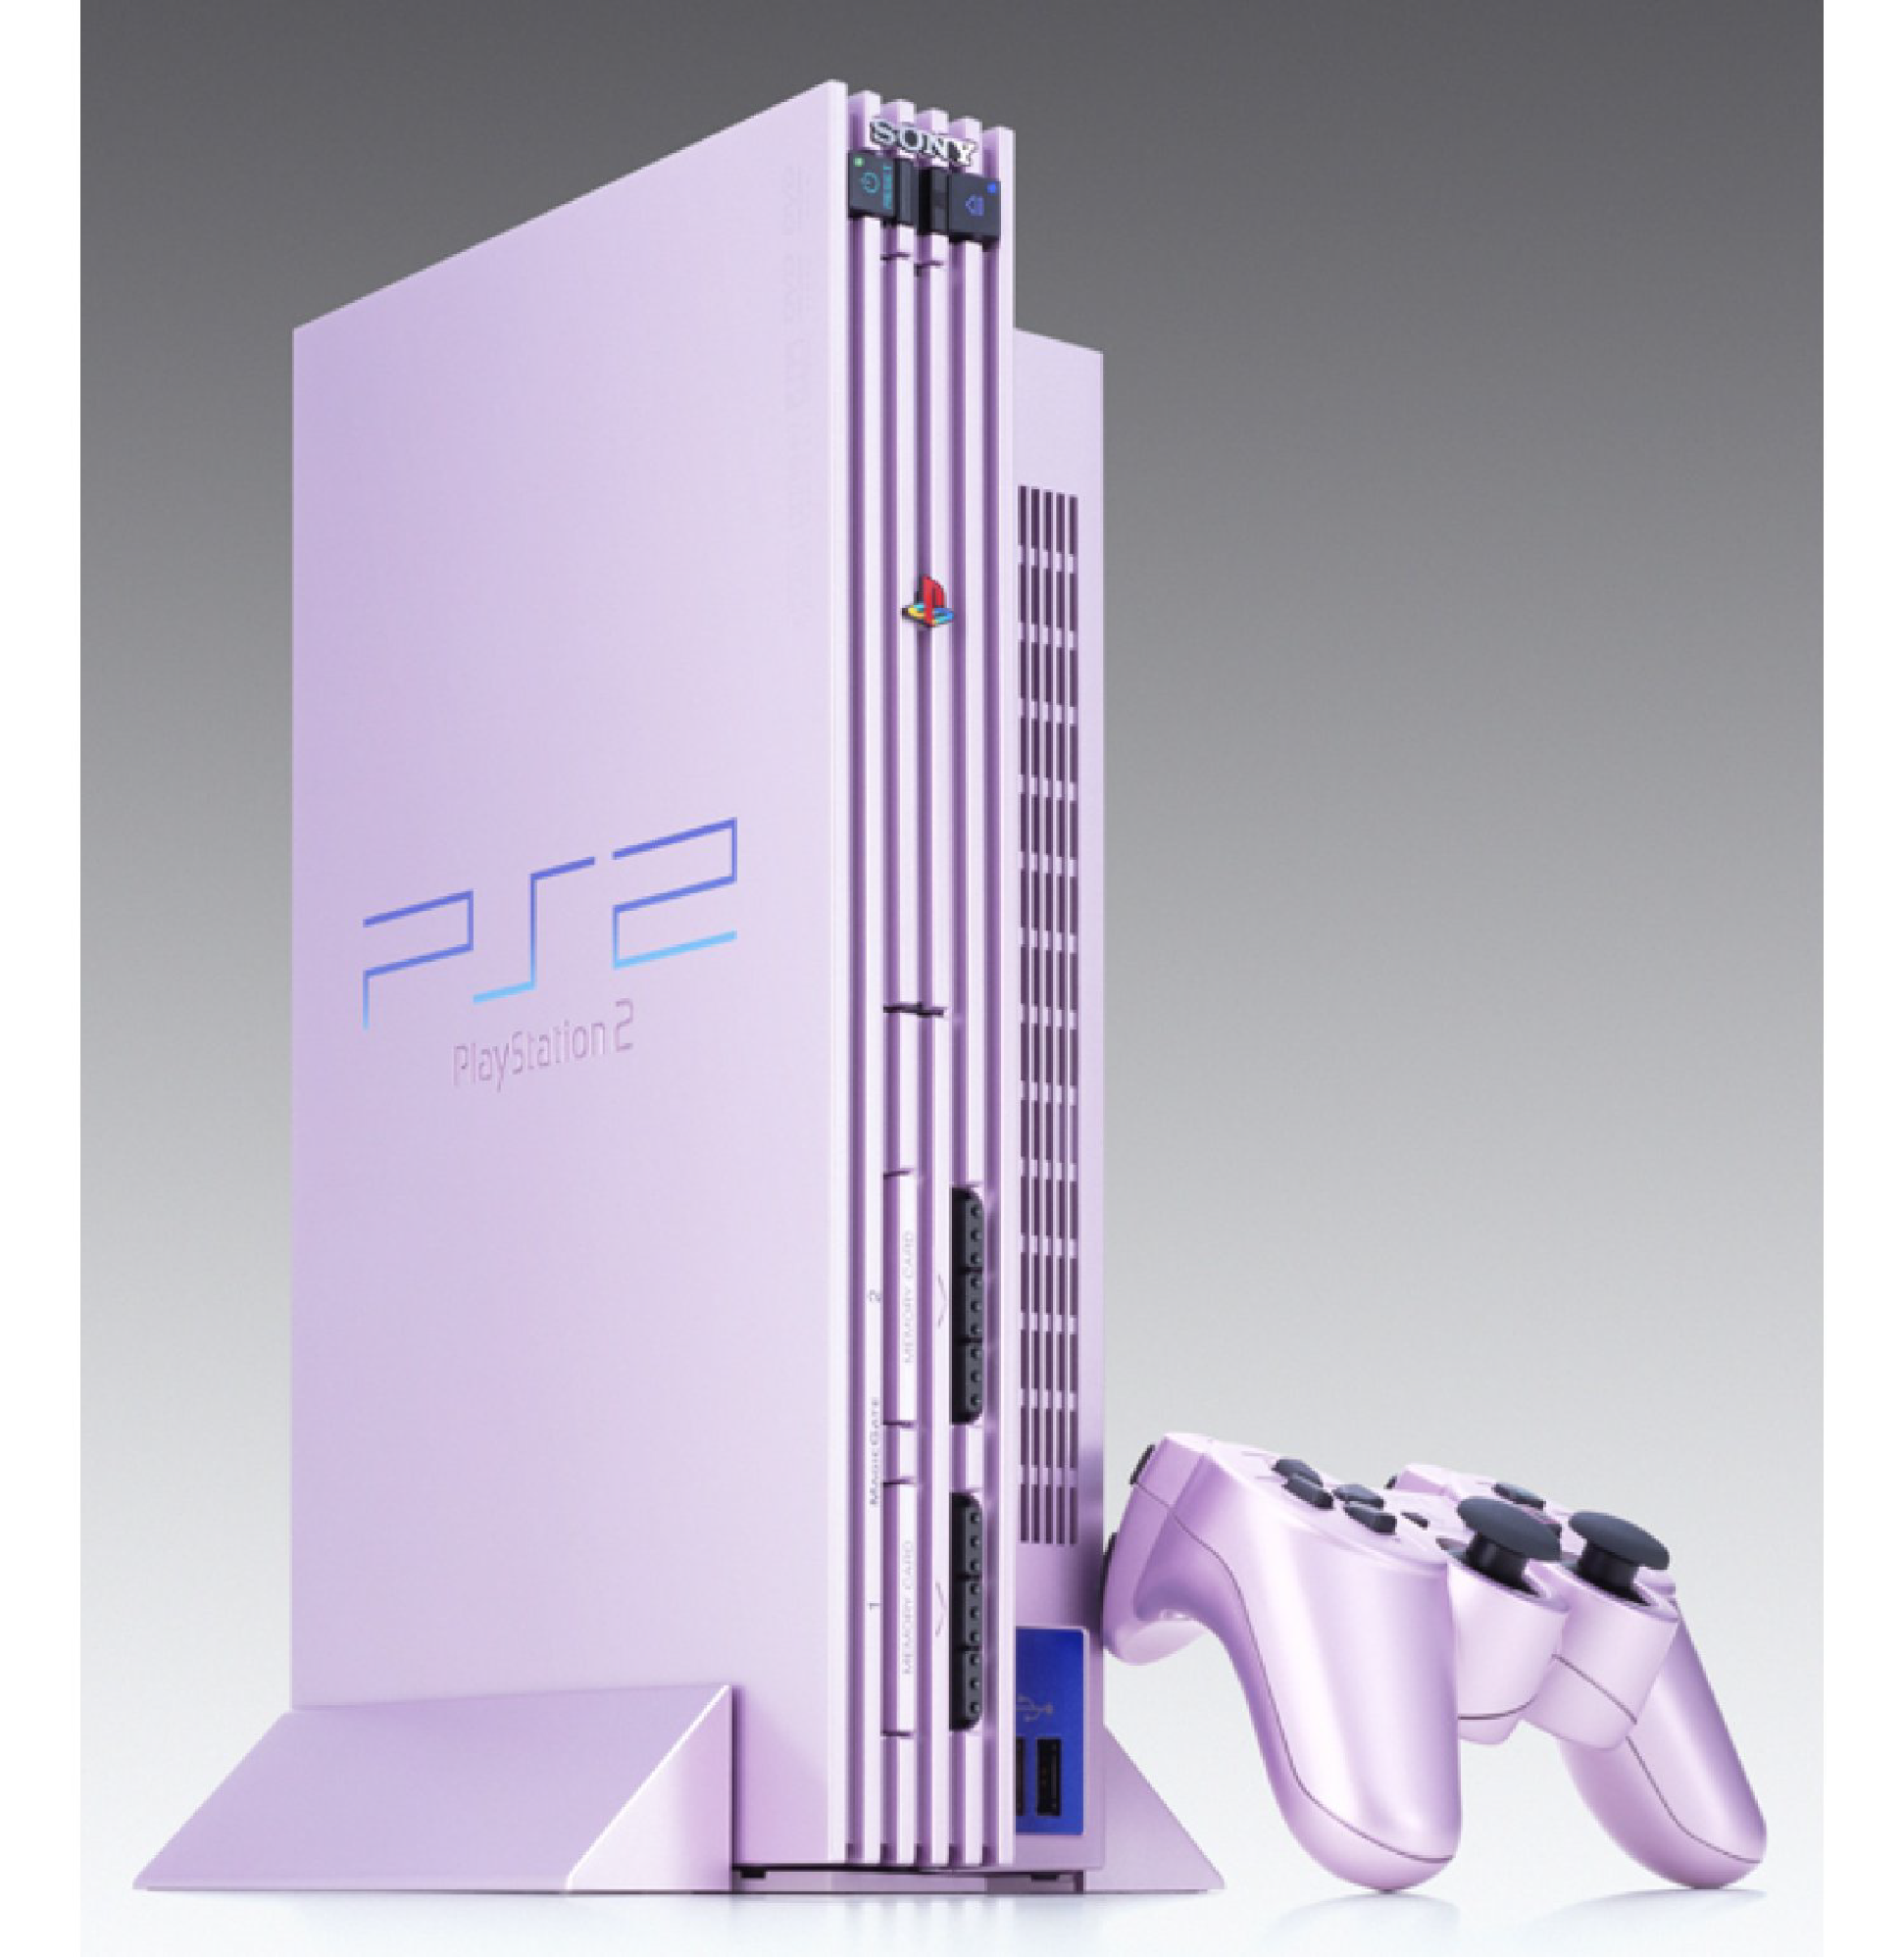 Sony Playstation 2 Sakura Pink LIMITED EDITION